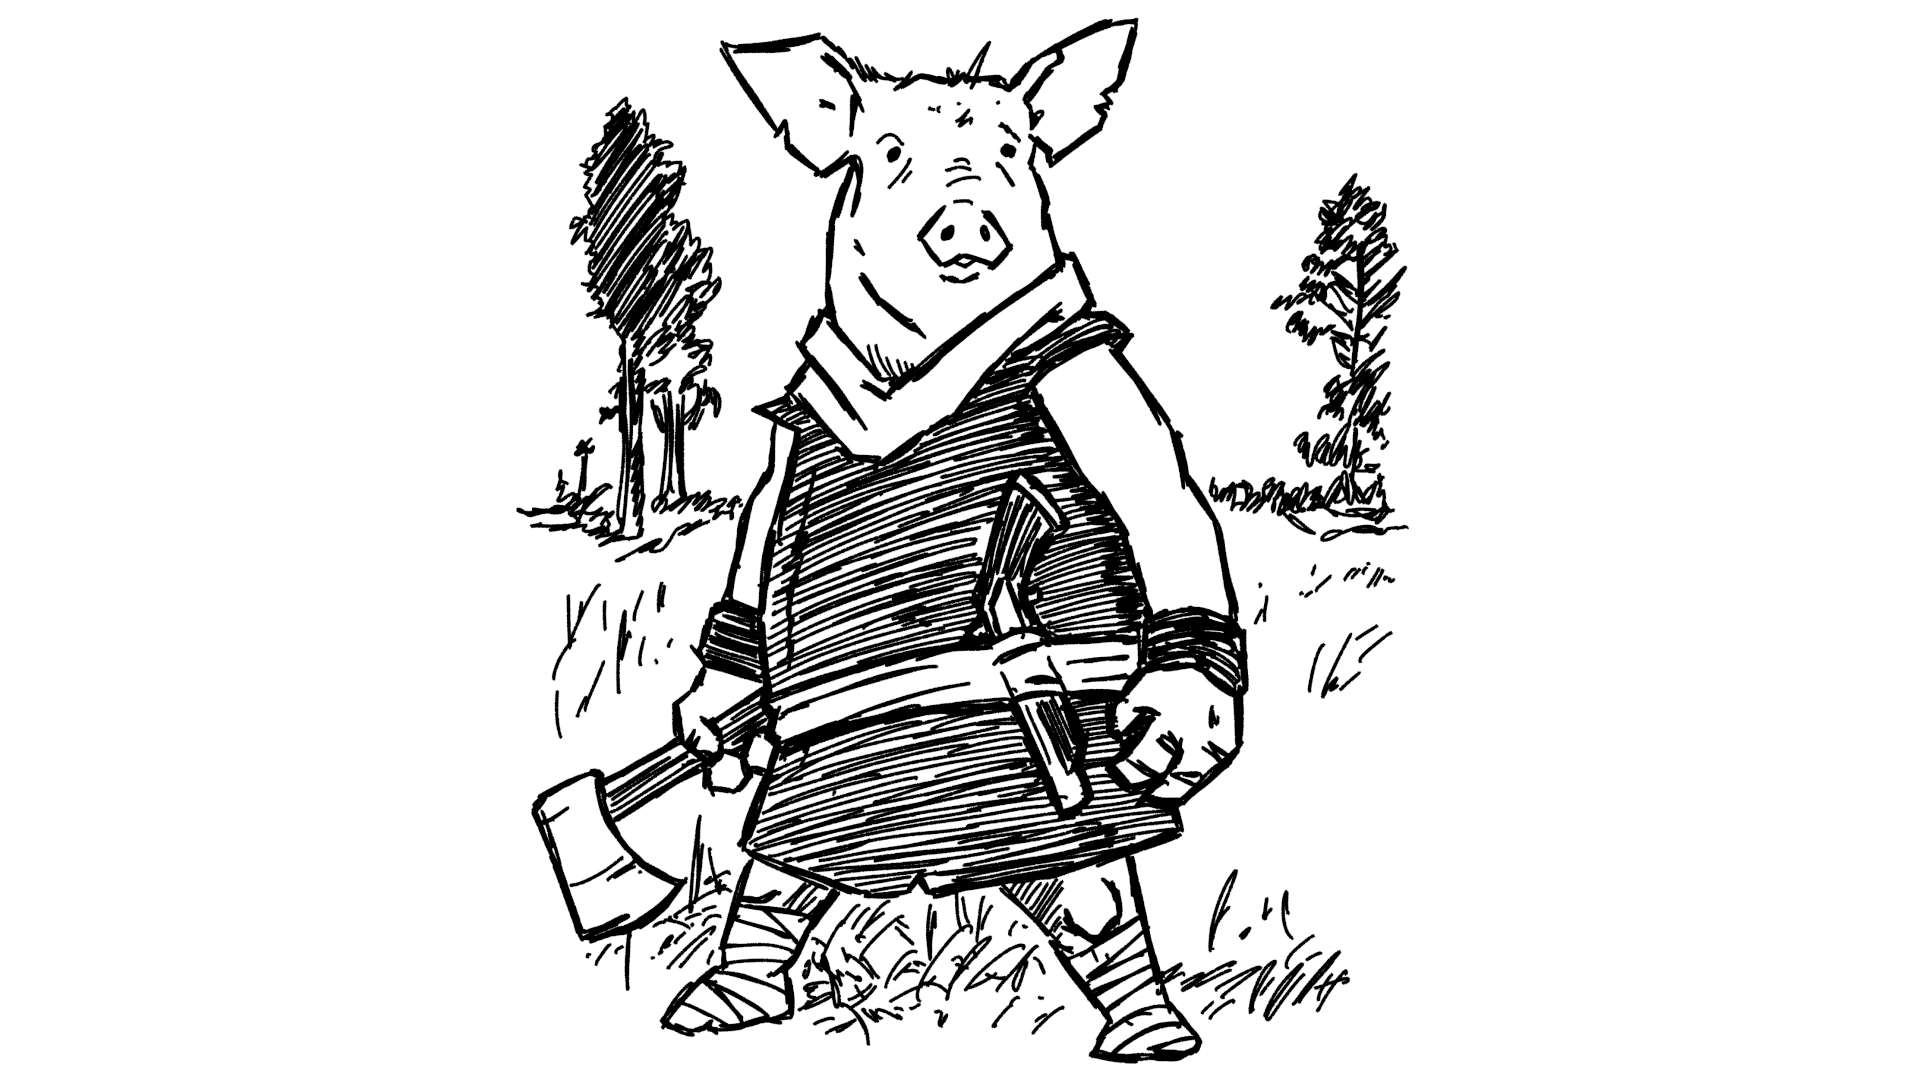 Old school DnD Adventure against an evil Winnie the Pooh - a stout piglet-man wields an axe